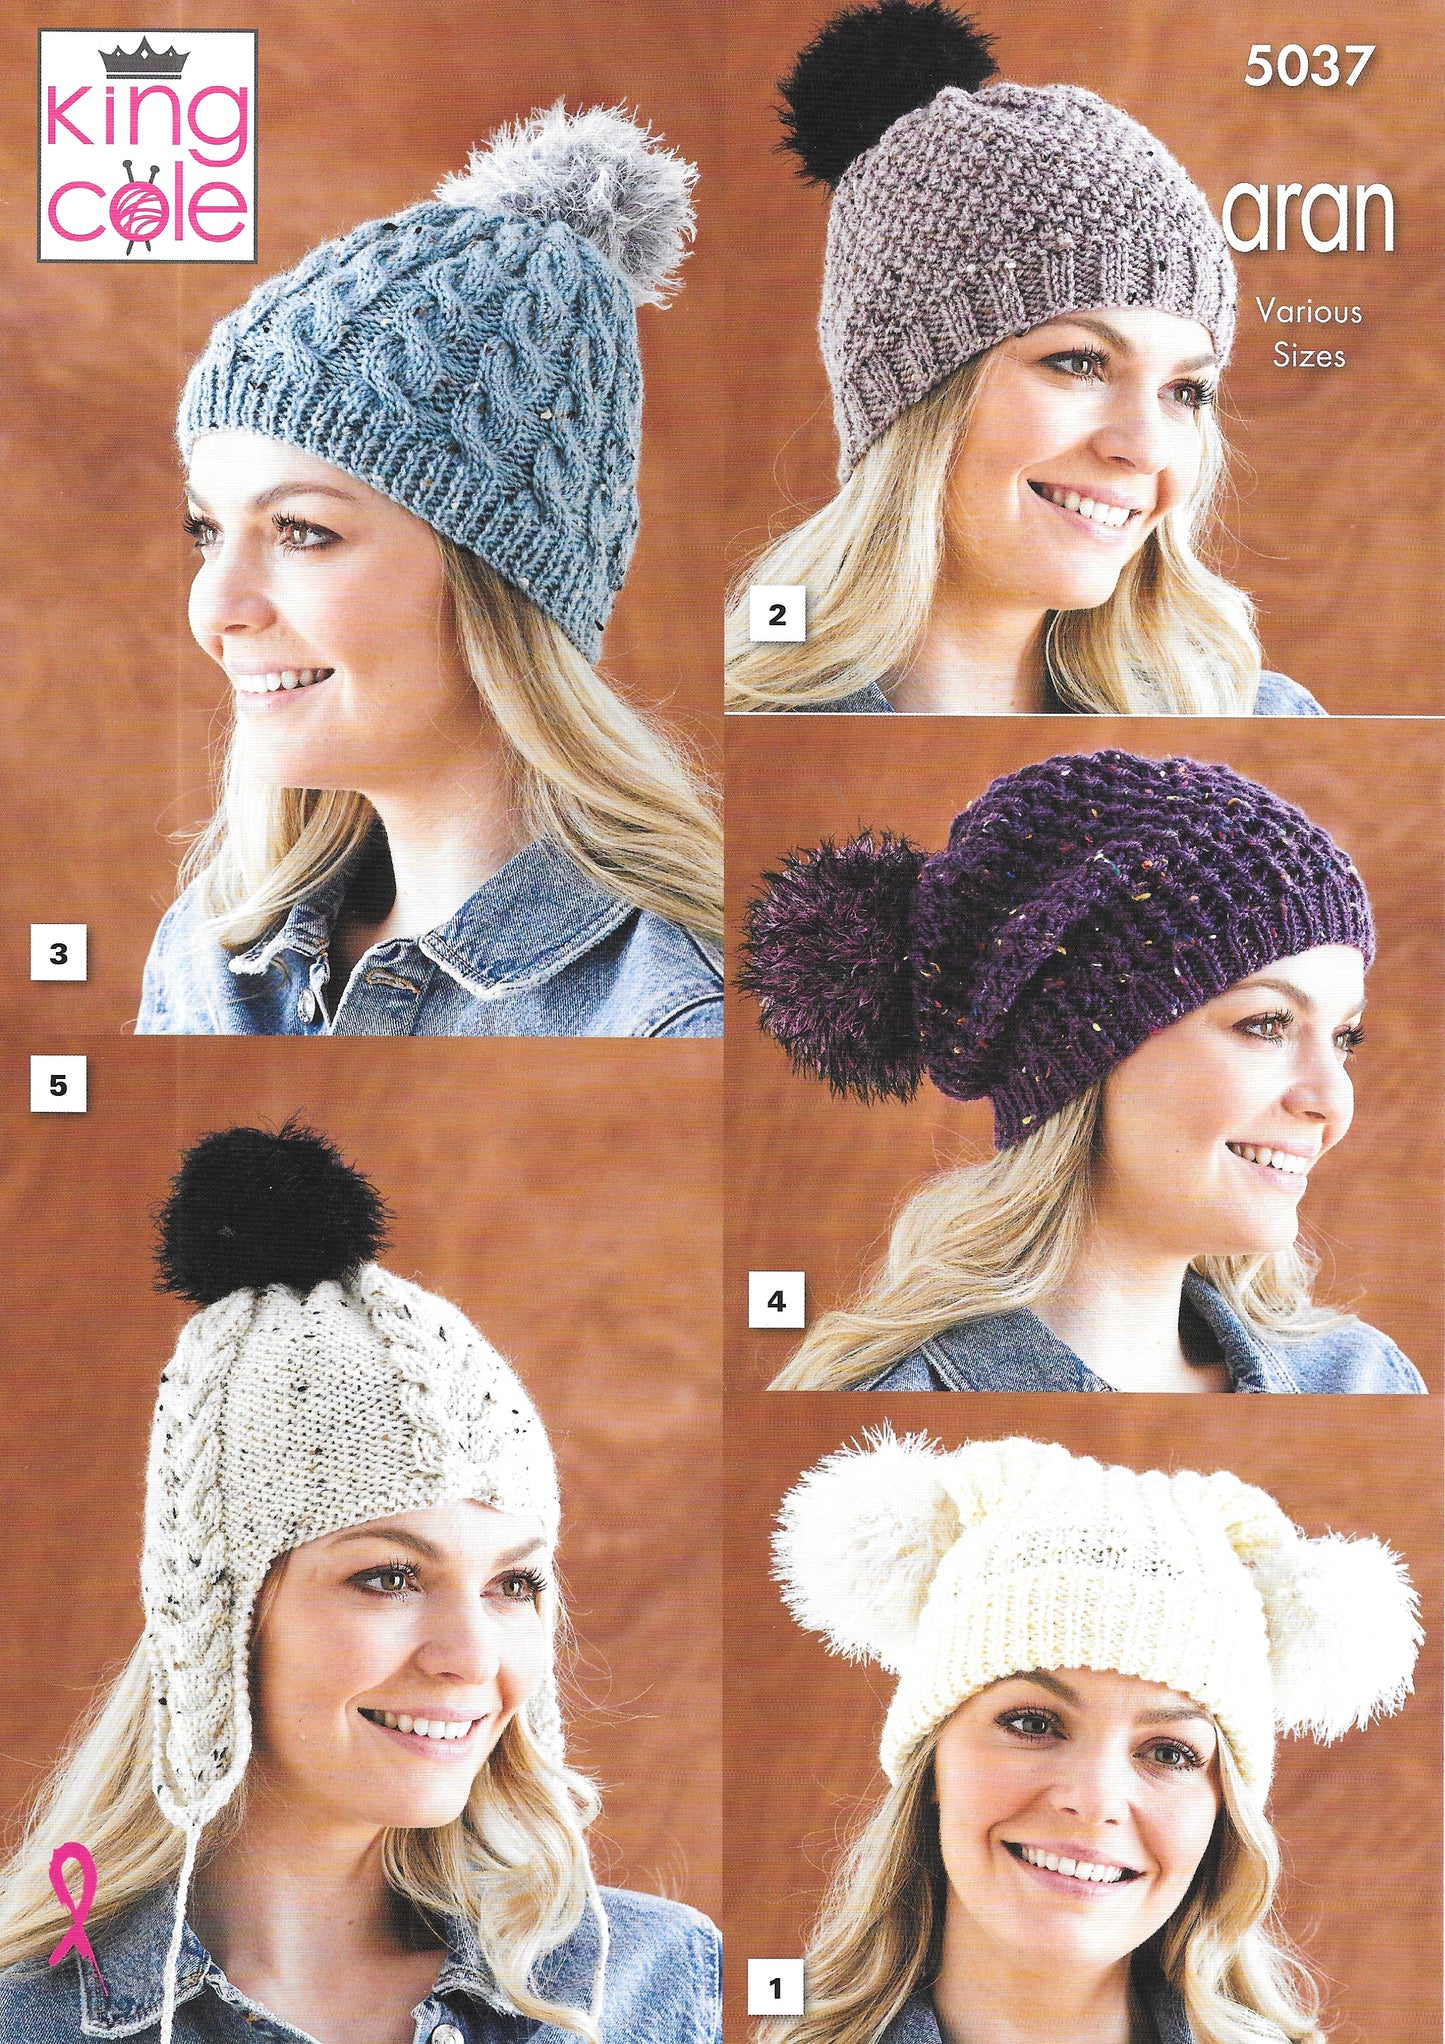 5037 King Cole knitting pattern. Lady's hats. Aran.